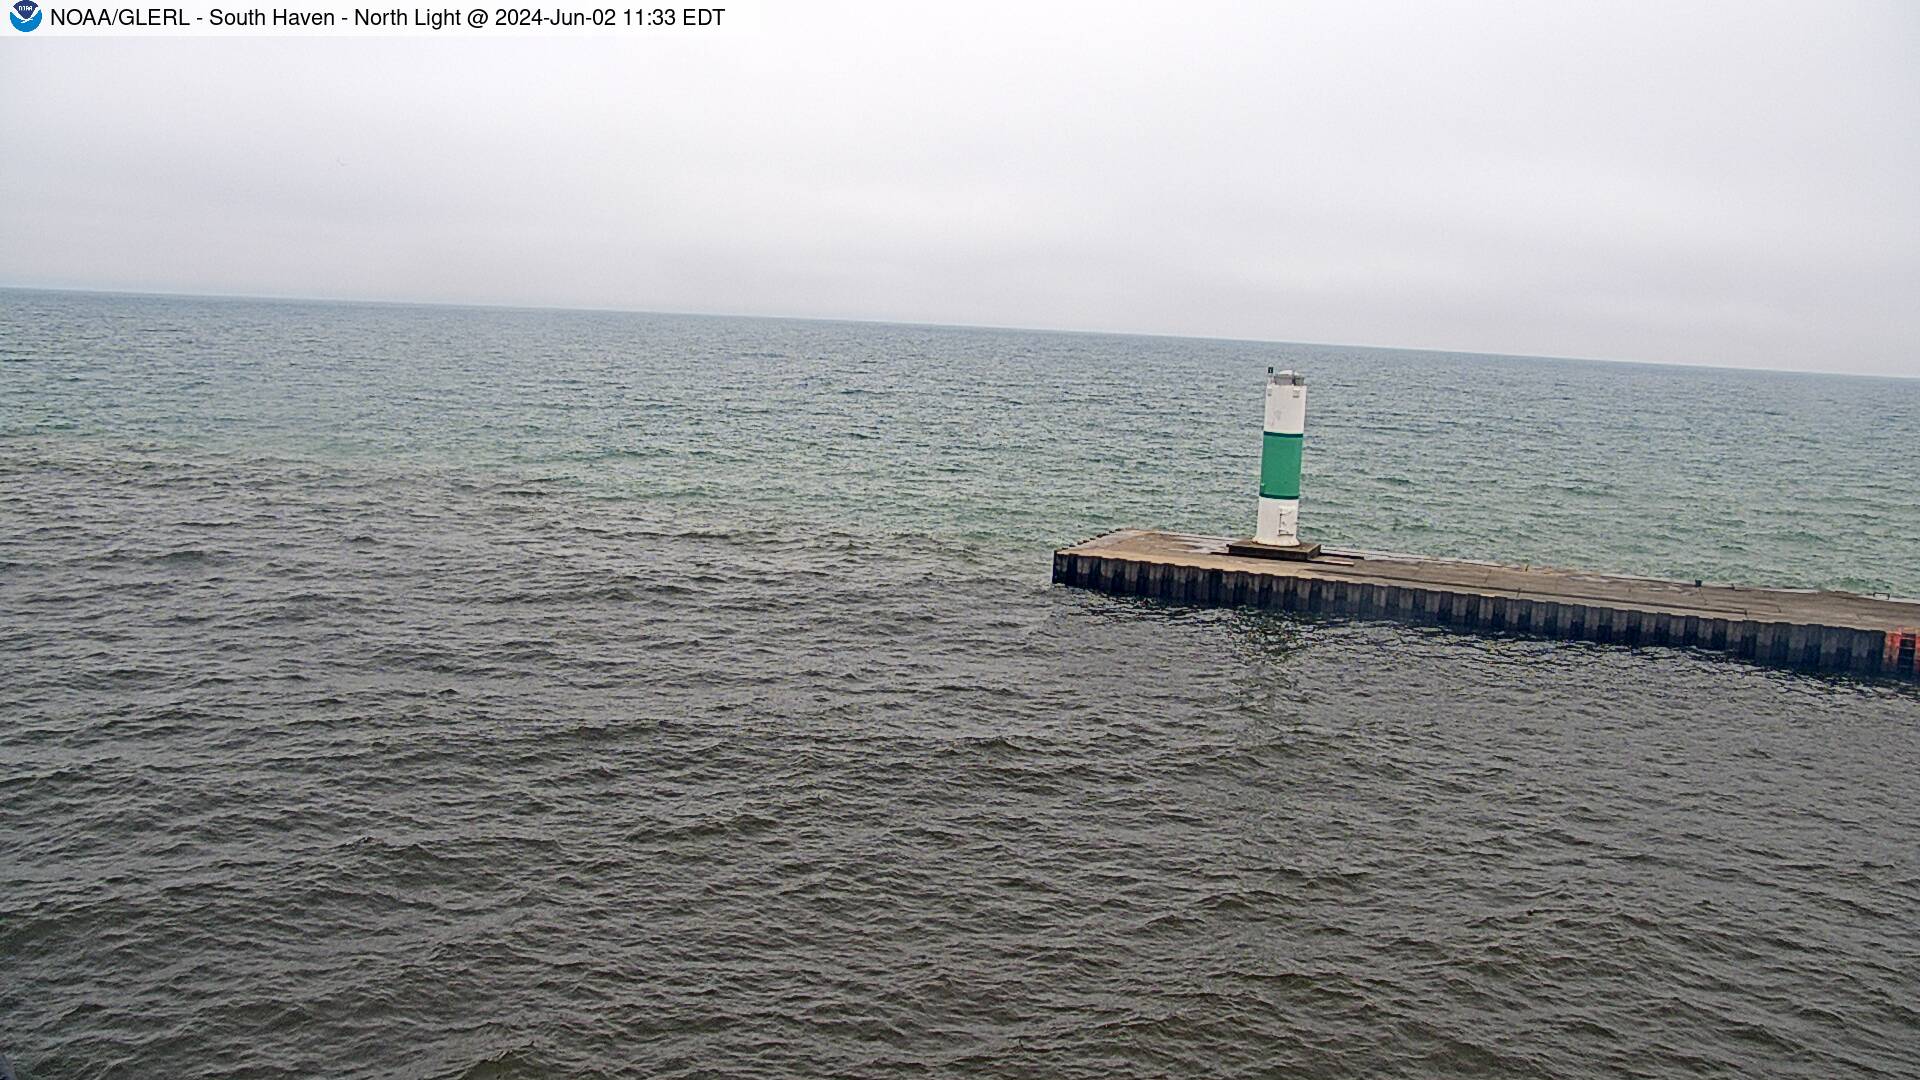 South Haven, Michigan Mer. 11:35